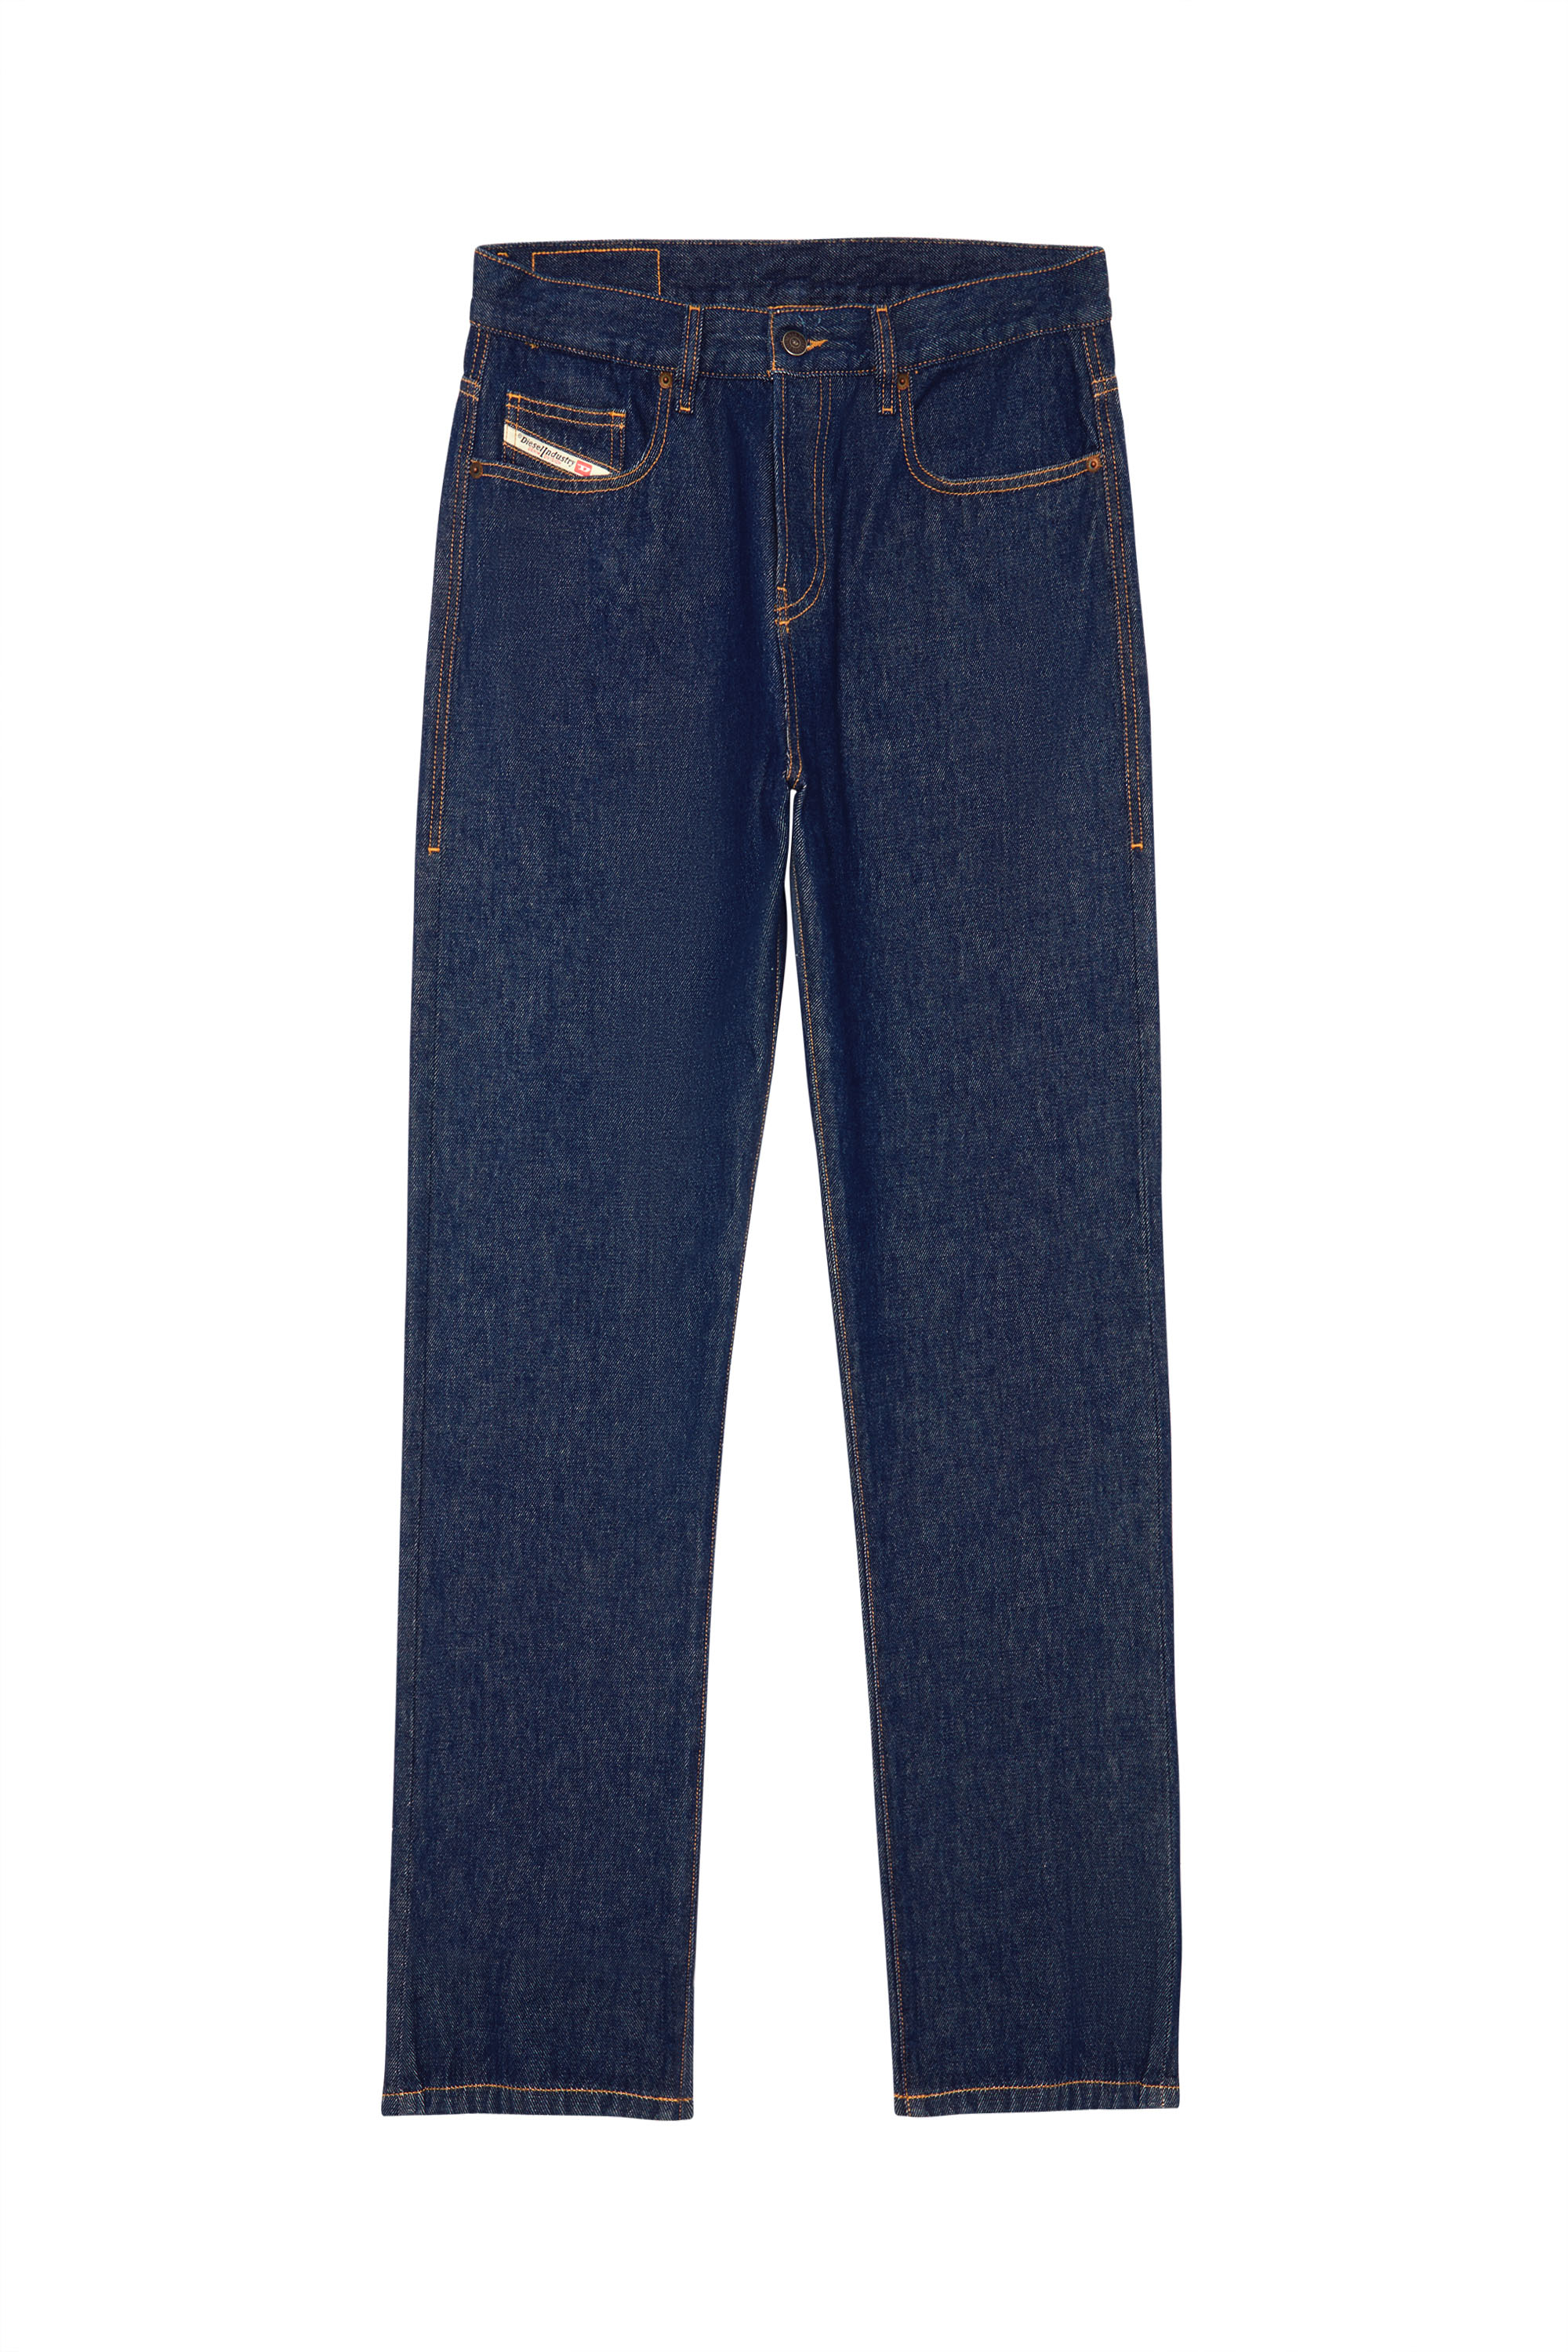 2020 D-VIKER Z9B85 Straight Jeans, Bleu Foncé - Jeans